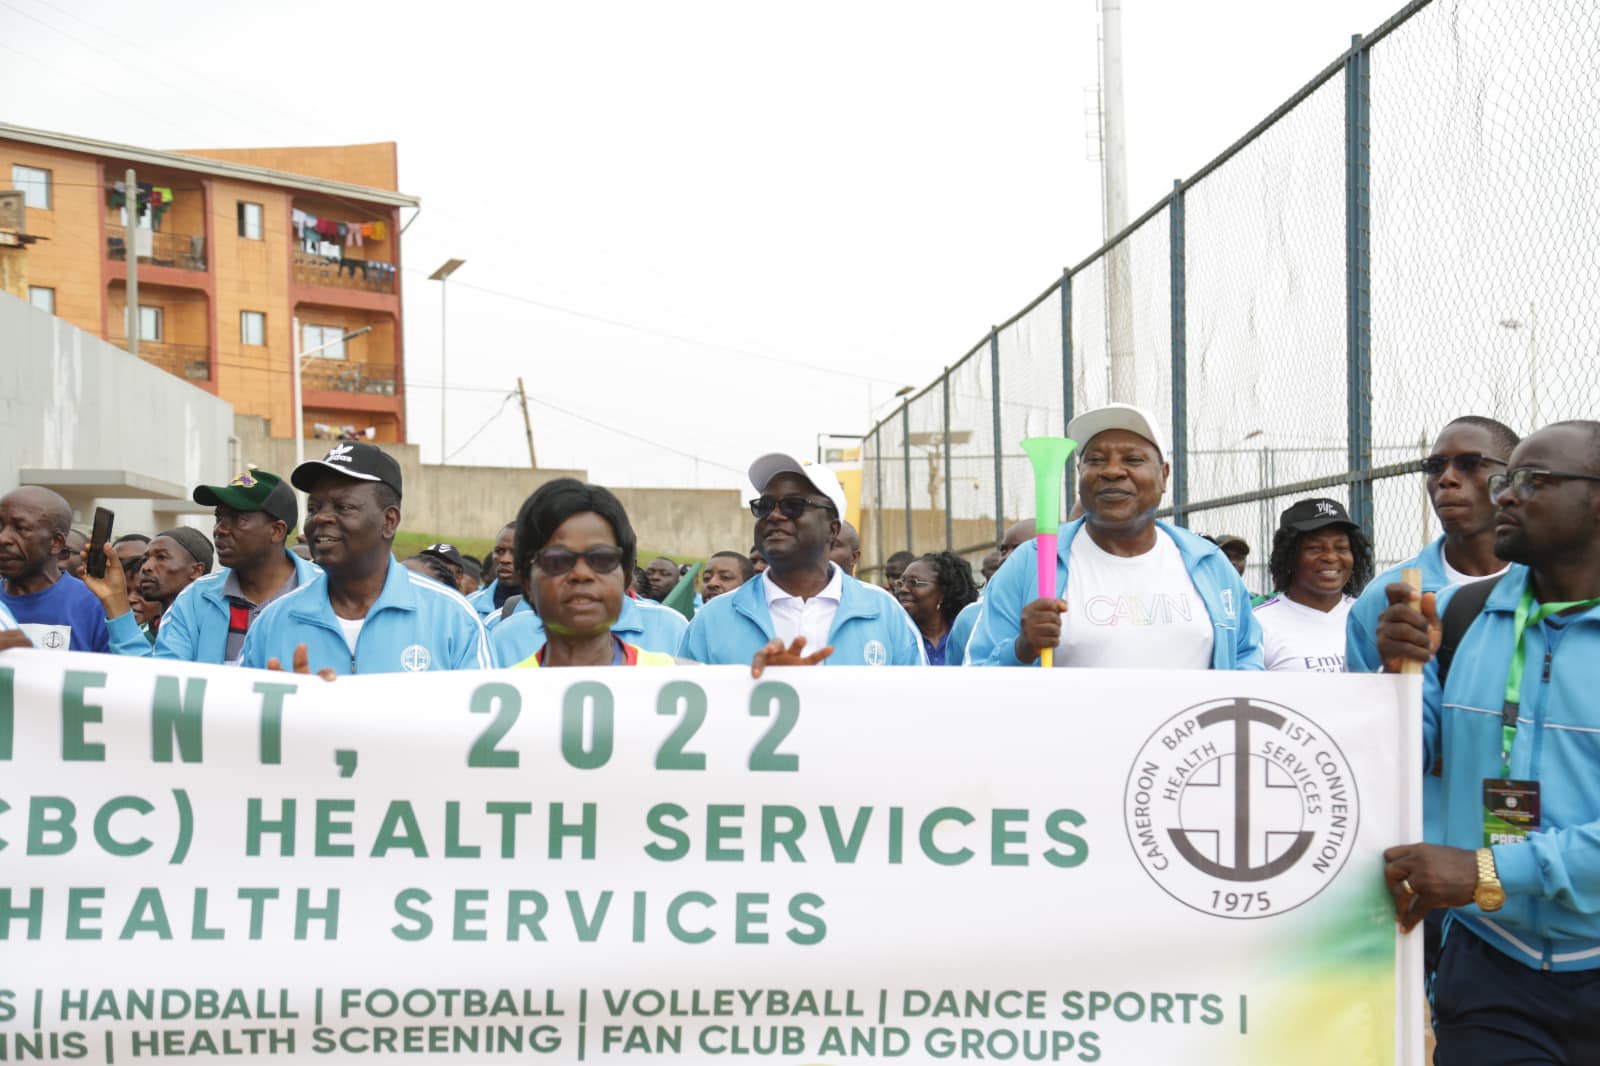 Administrators leading the sports walk into the Bamendzi stadium